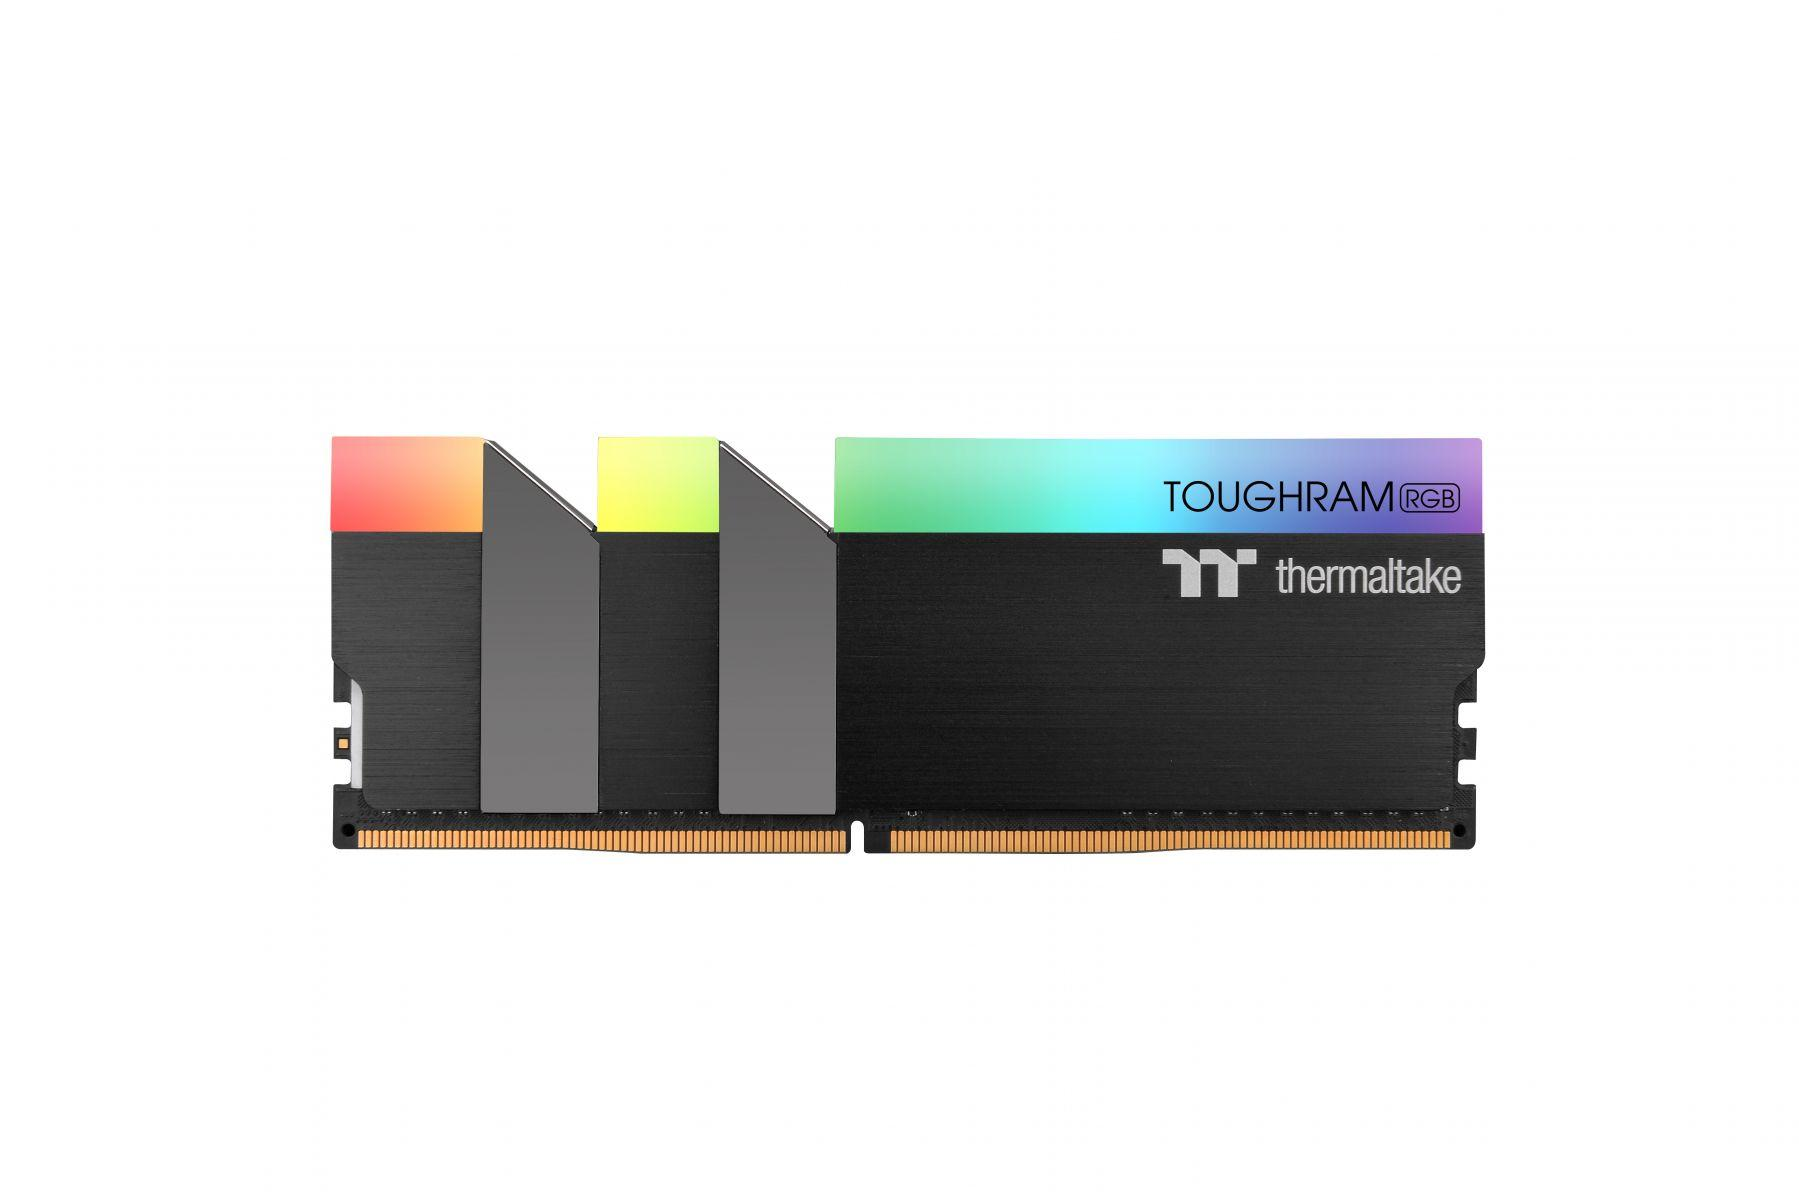 16 DDR4 GB TOUGHRAM THERMALTAKE Arbeitsspeicher RGB